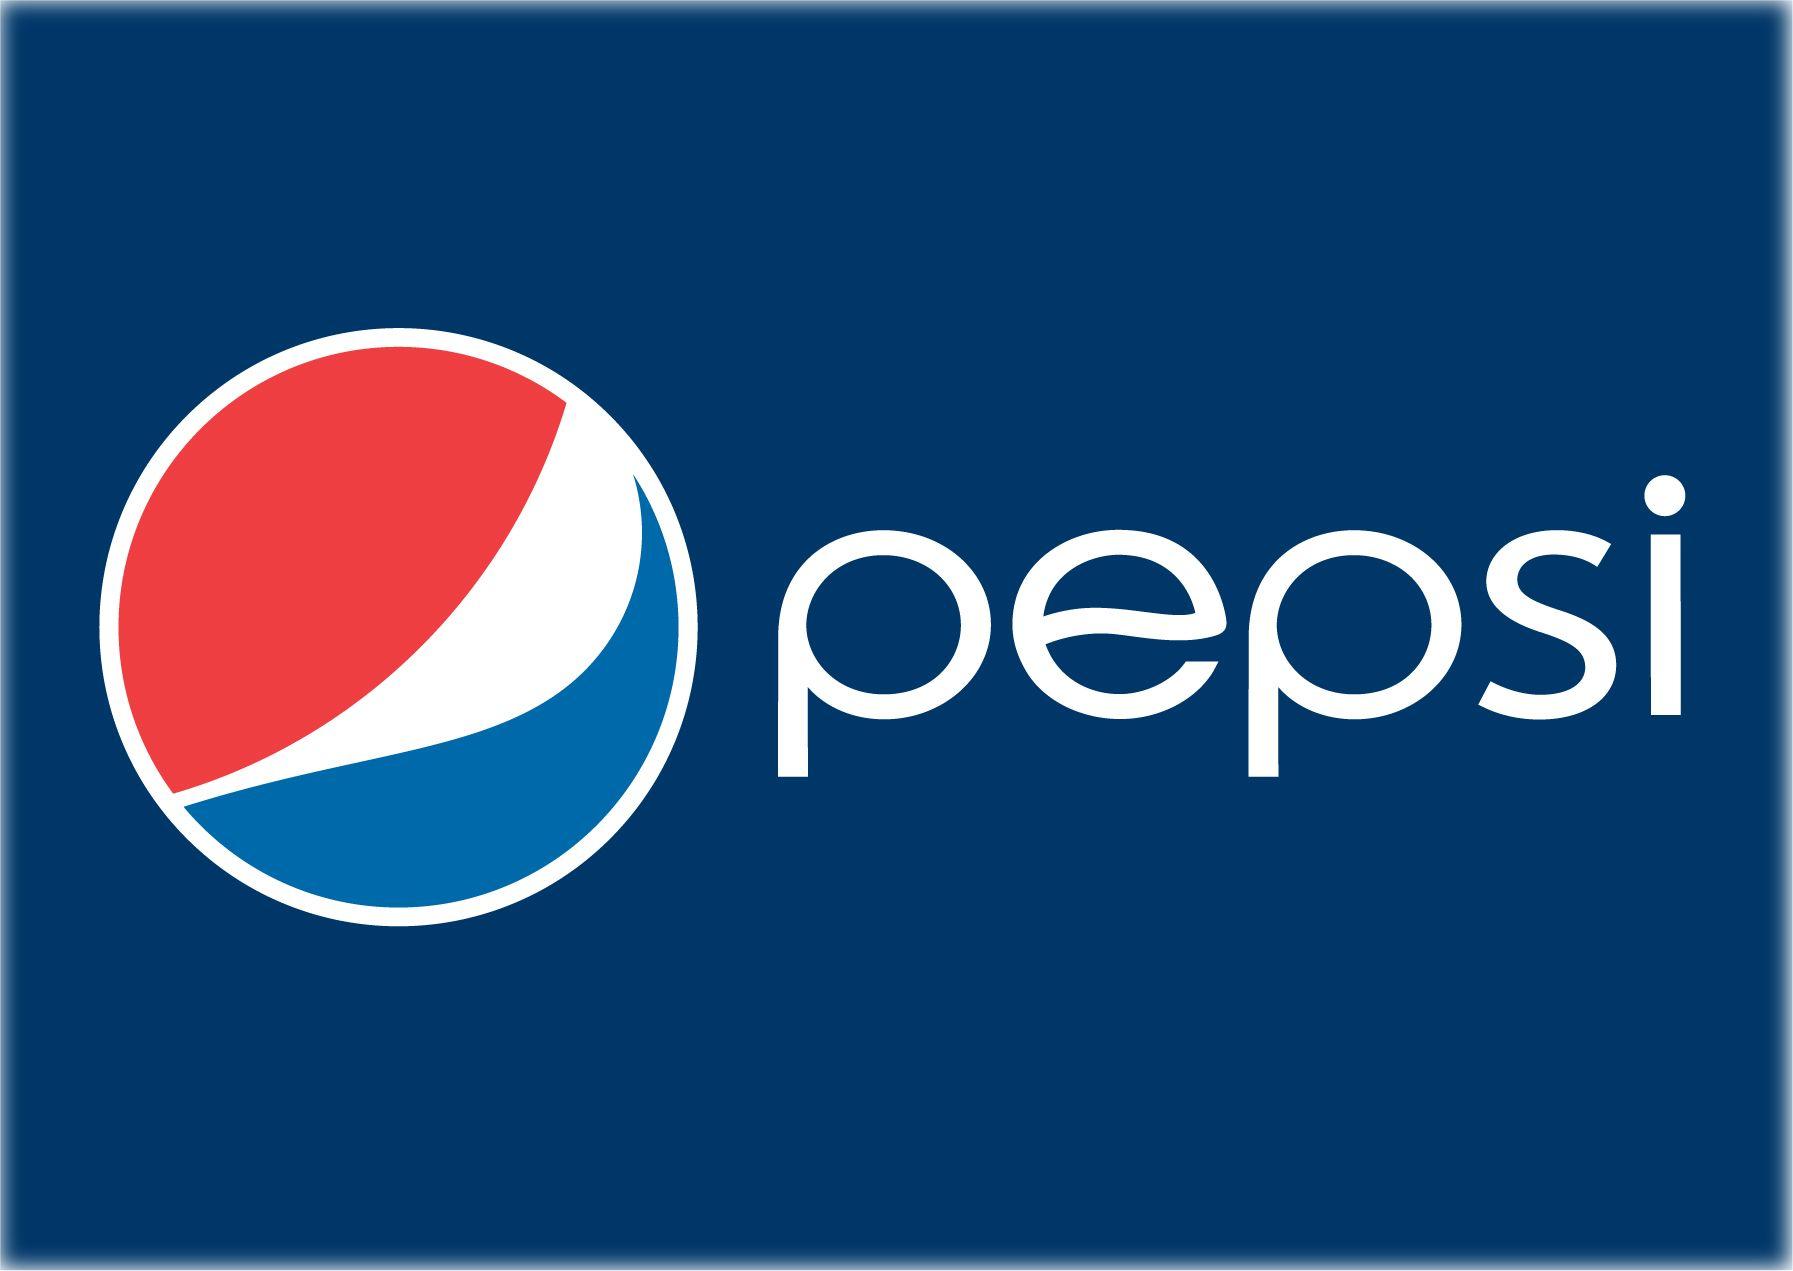 PepsiCo Corporate Logo - Pepsi logo HD Wallpapers | StreetBites Logo Inspiration in 2019 ...